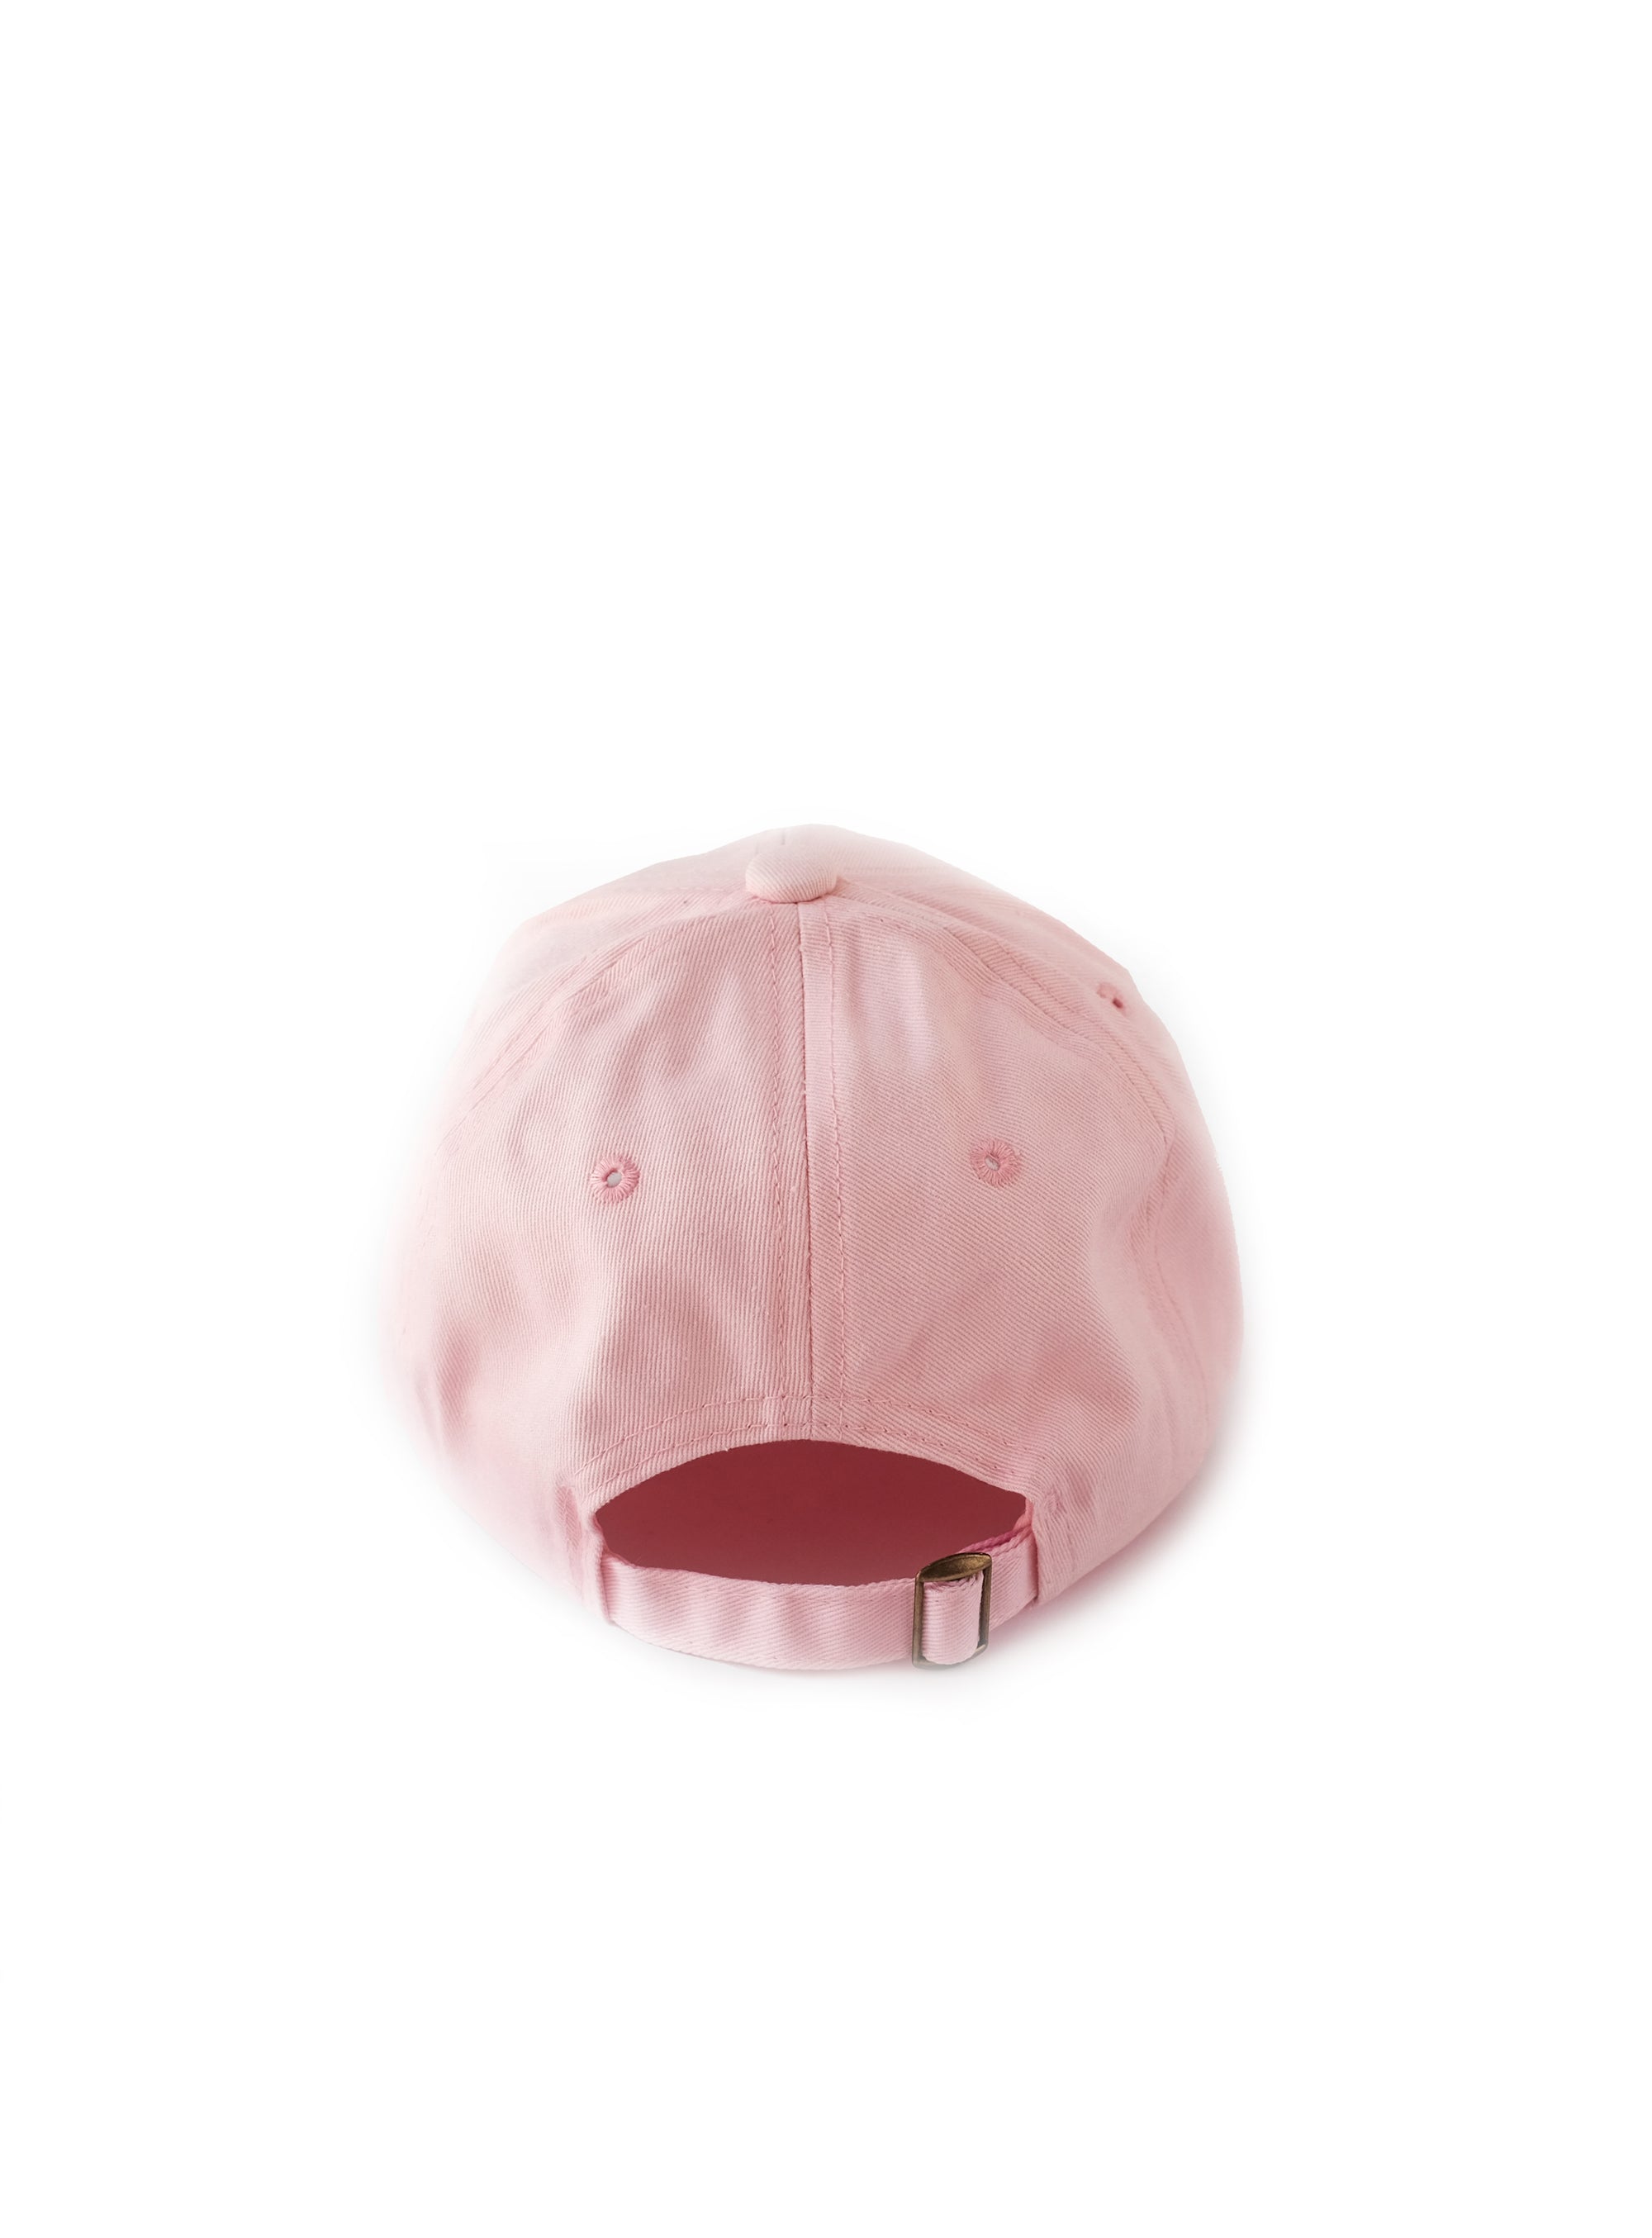 macaron pink cap with adjustable strap